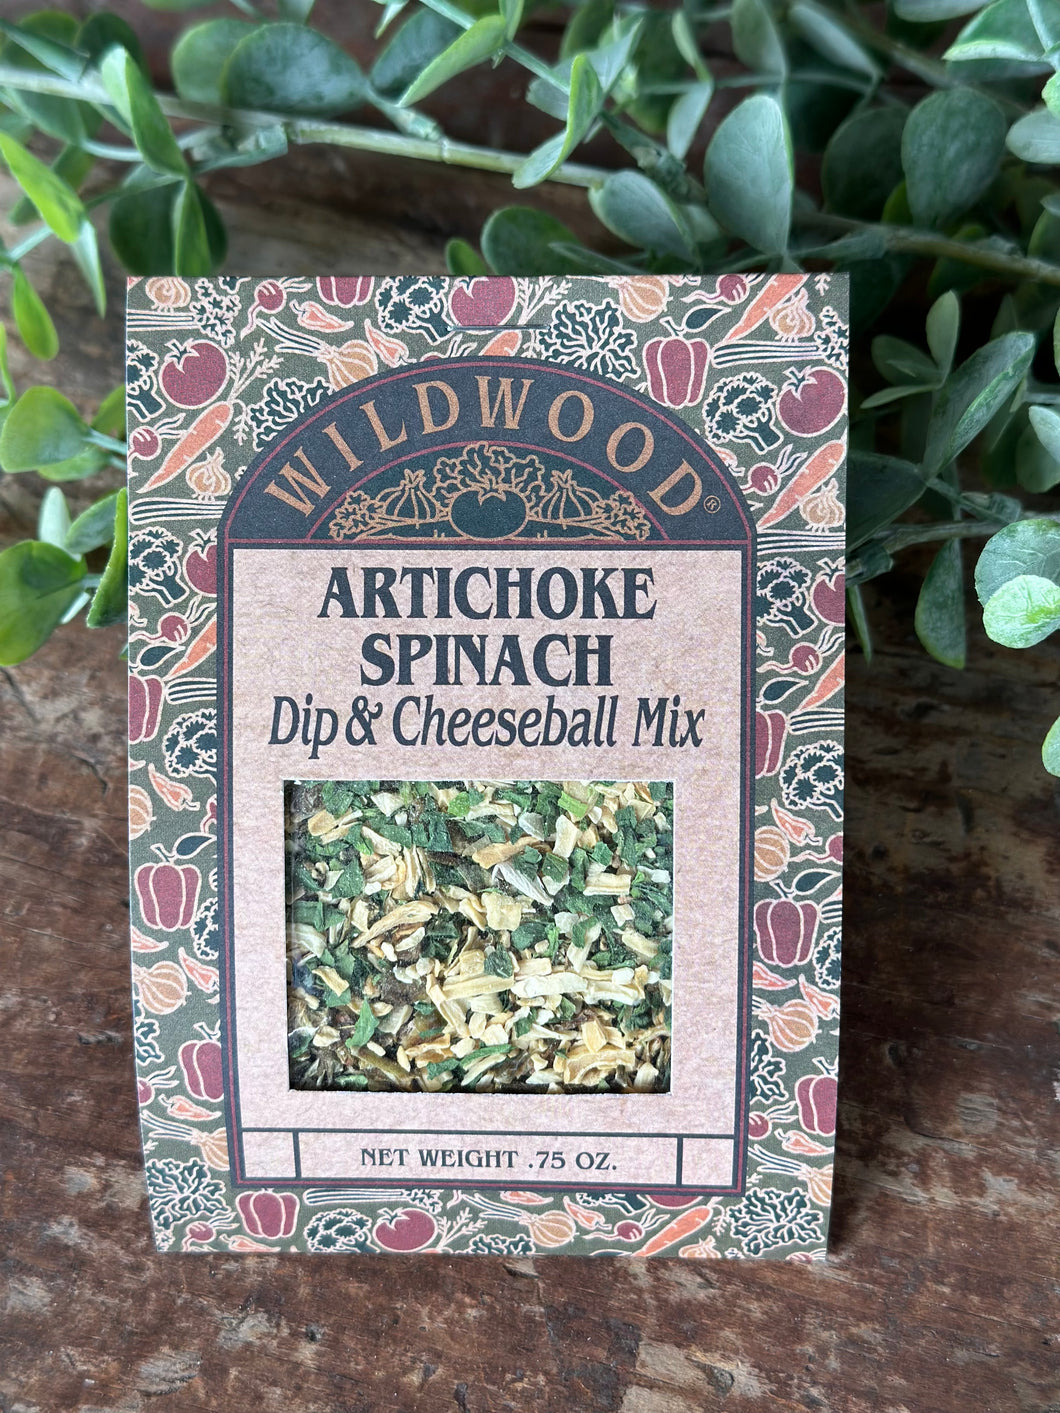 Wildwood Artichoke Spinach Dip mix